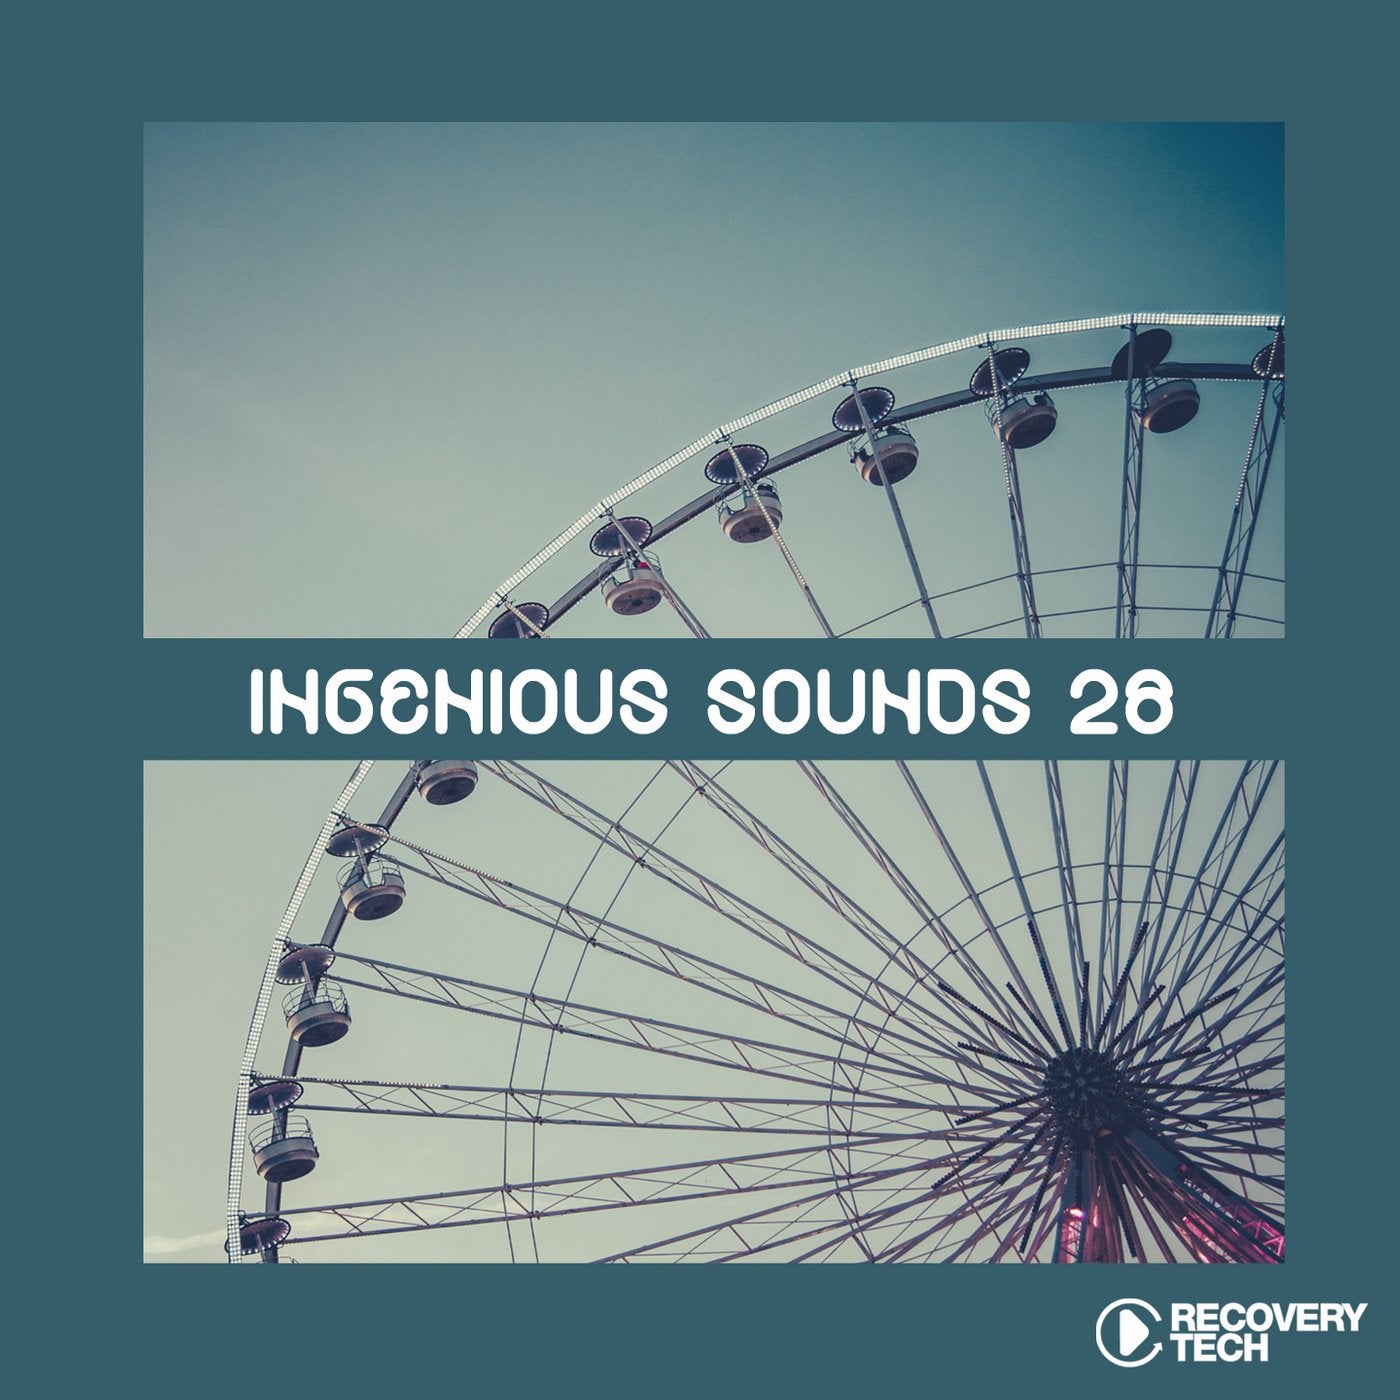 Ingenious Sounds Vol. 28